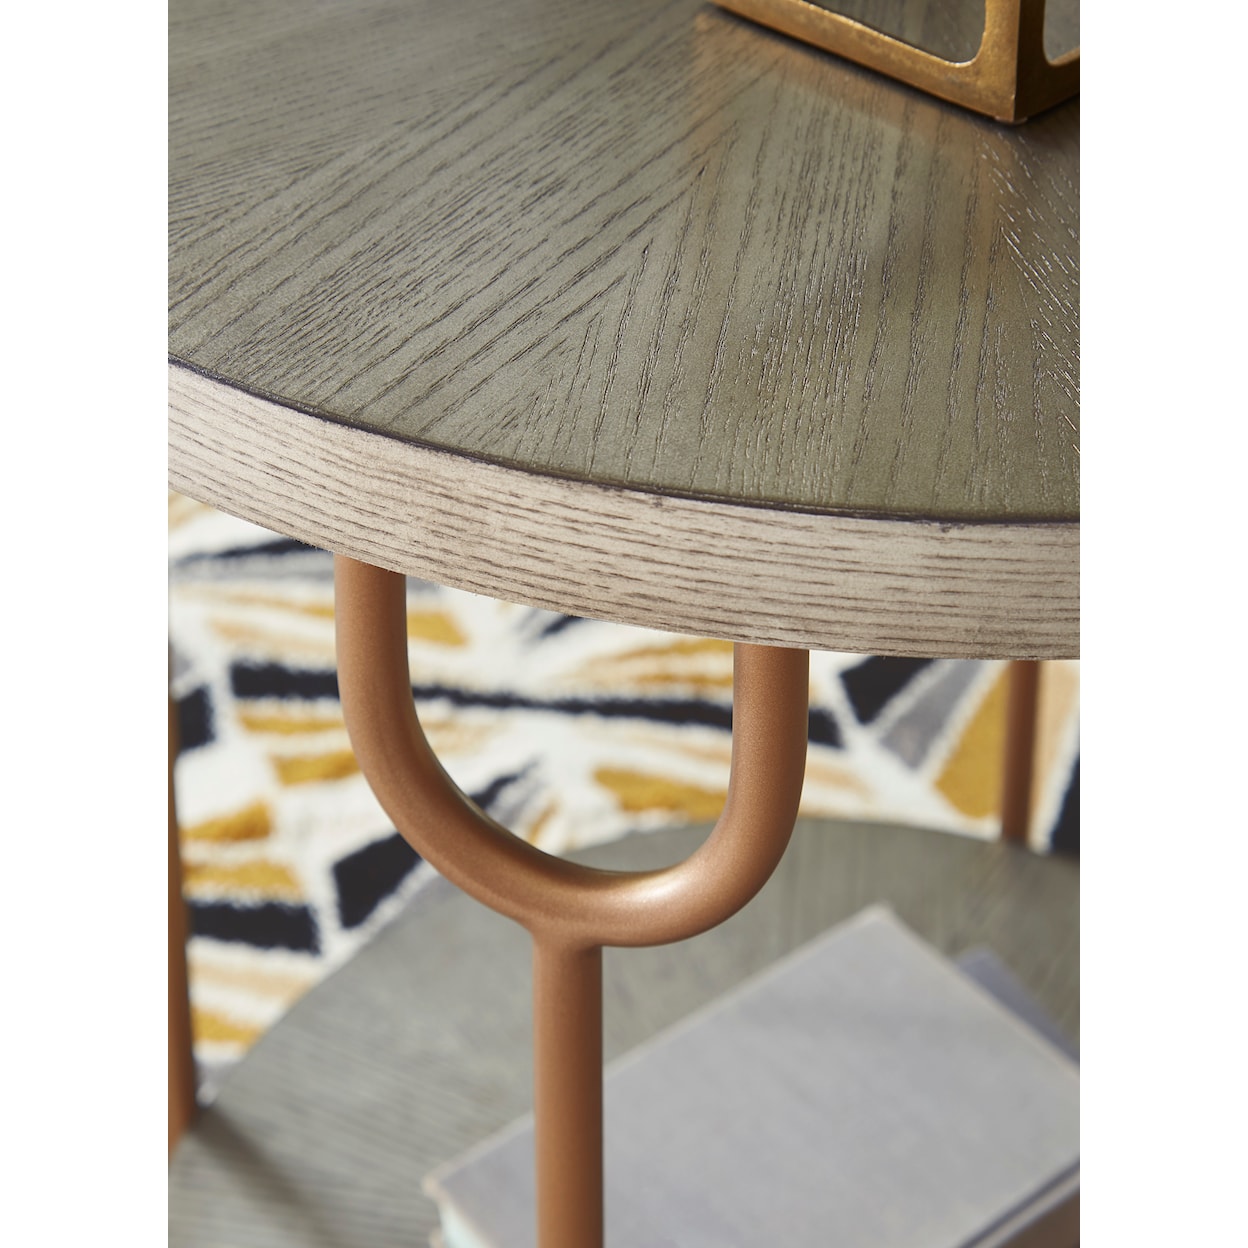 Signature Design by Ashley Furniture Ranoka End Table